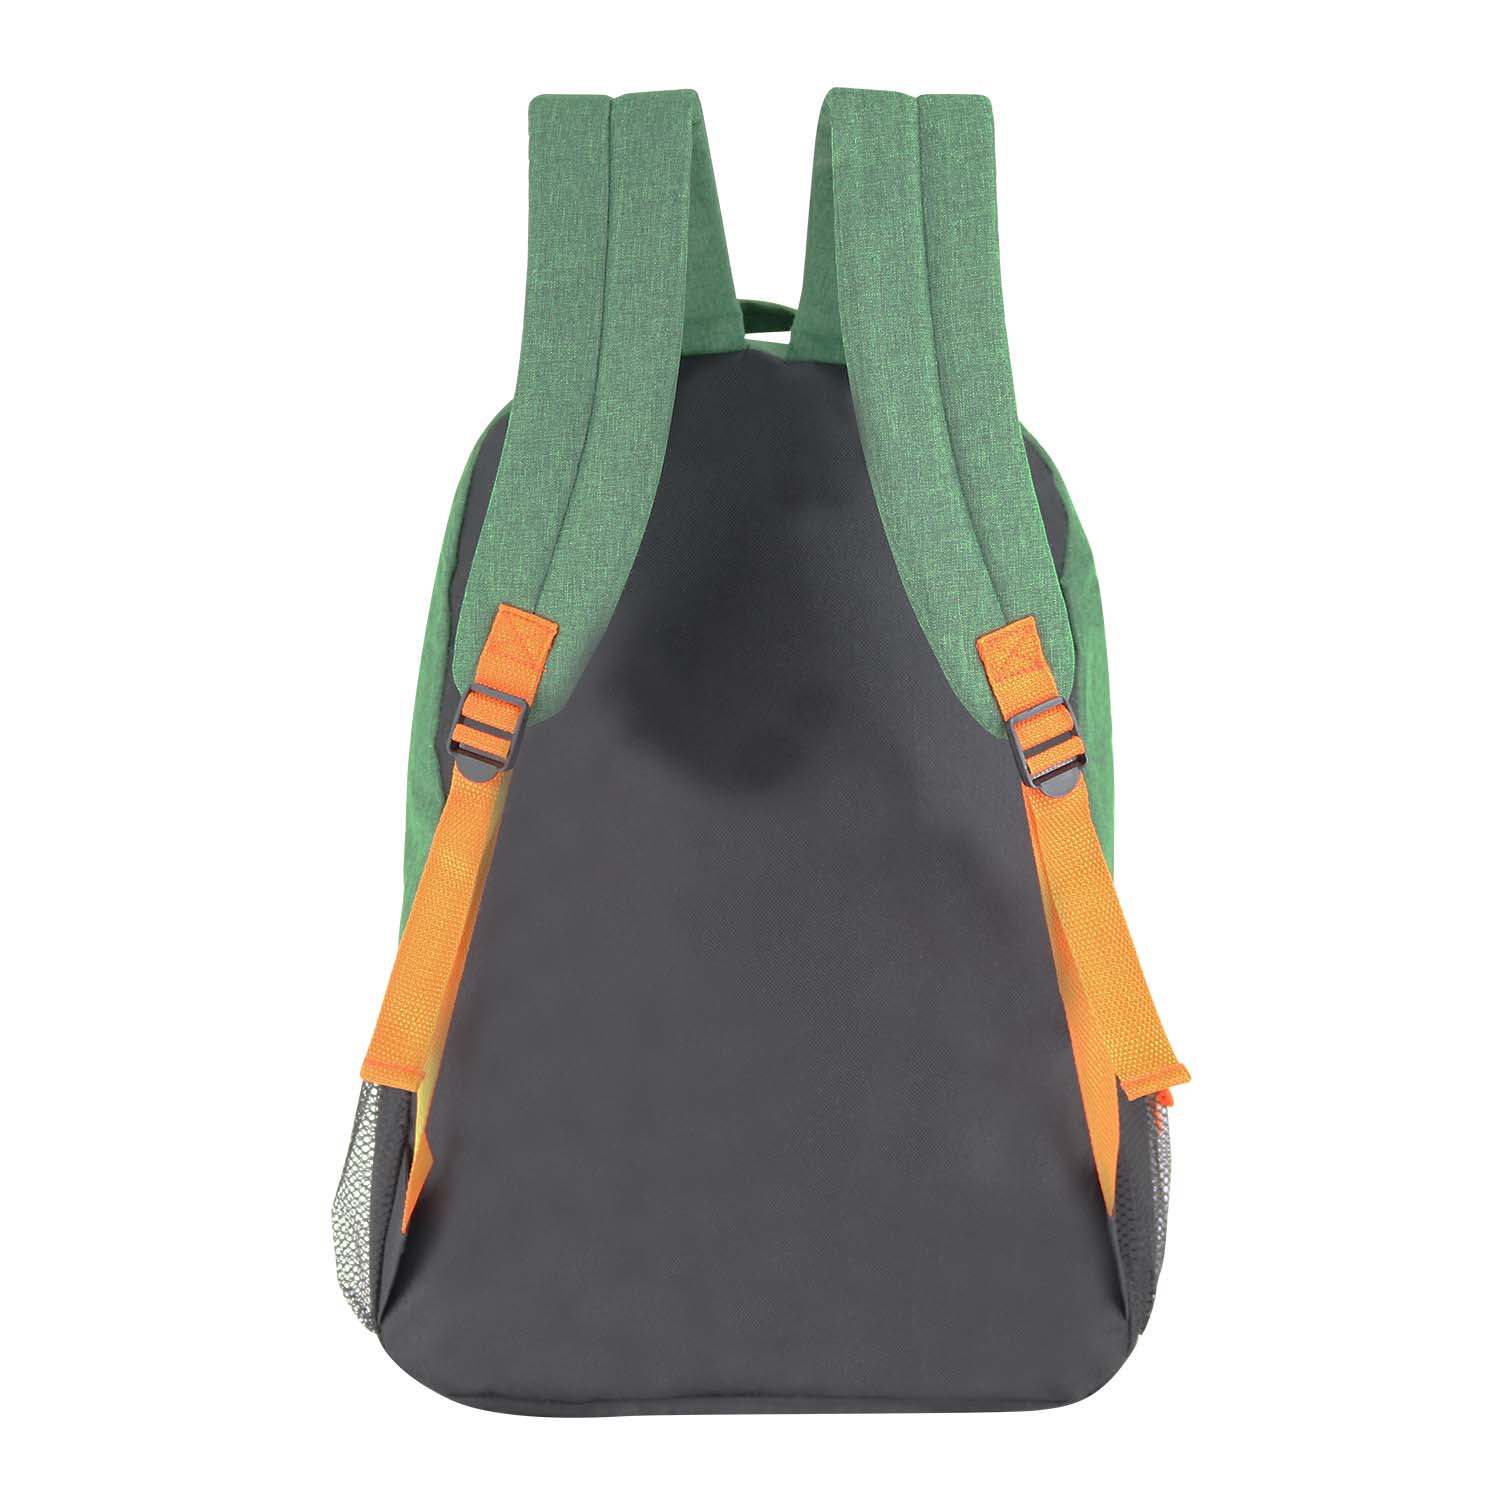 19" Basic Wholesale Backpack In 4 Colors - Bulk Case Of 24 Backpacks